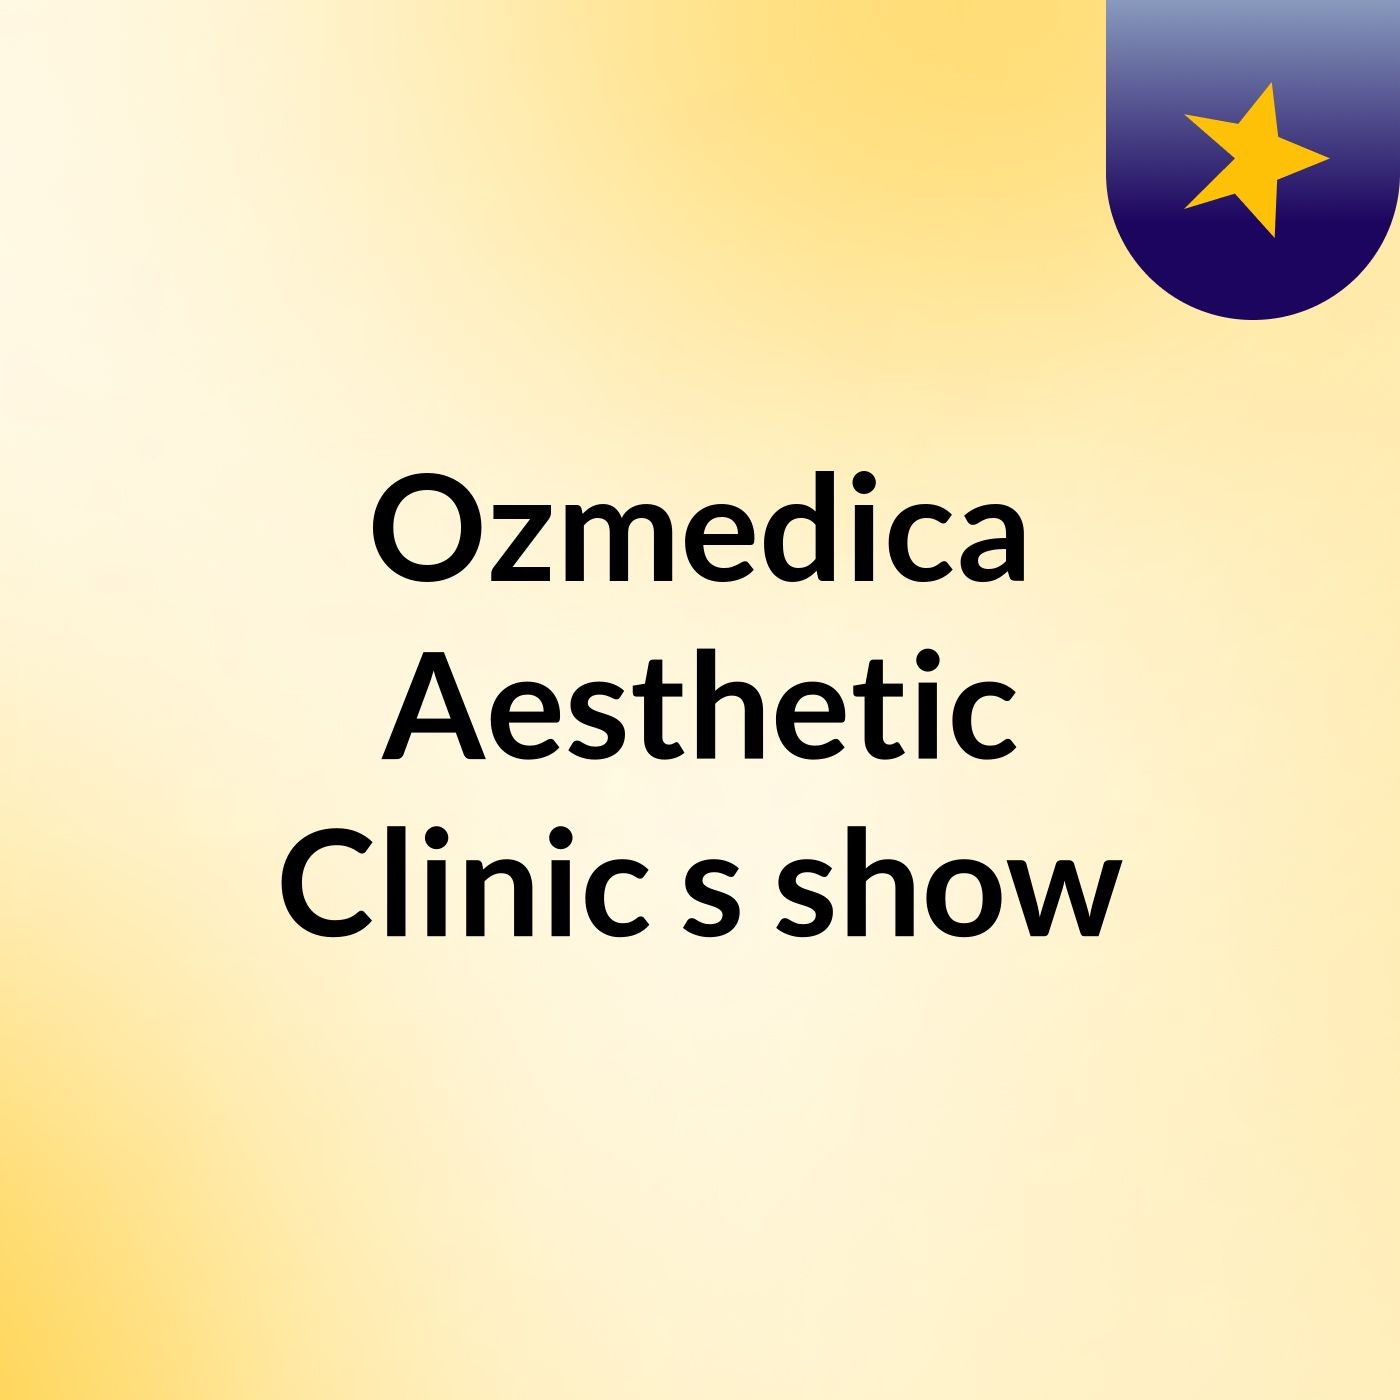 Ozmedica Aesthetic Clinic's show